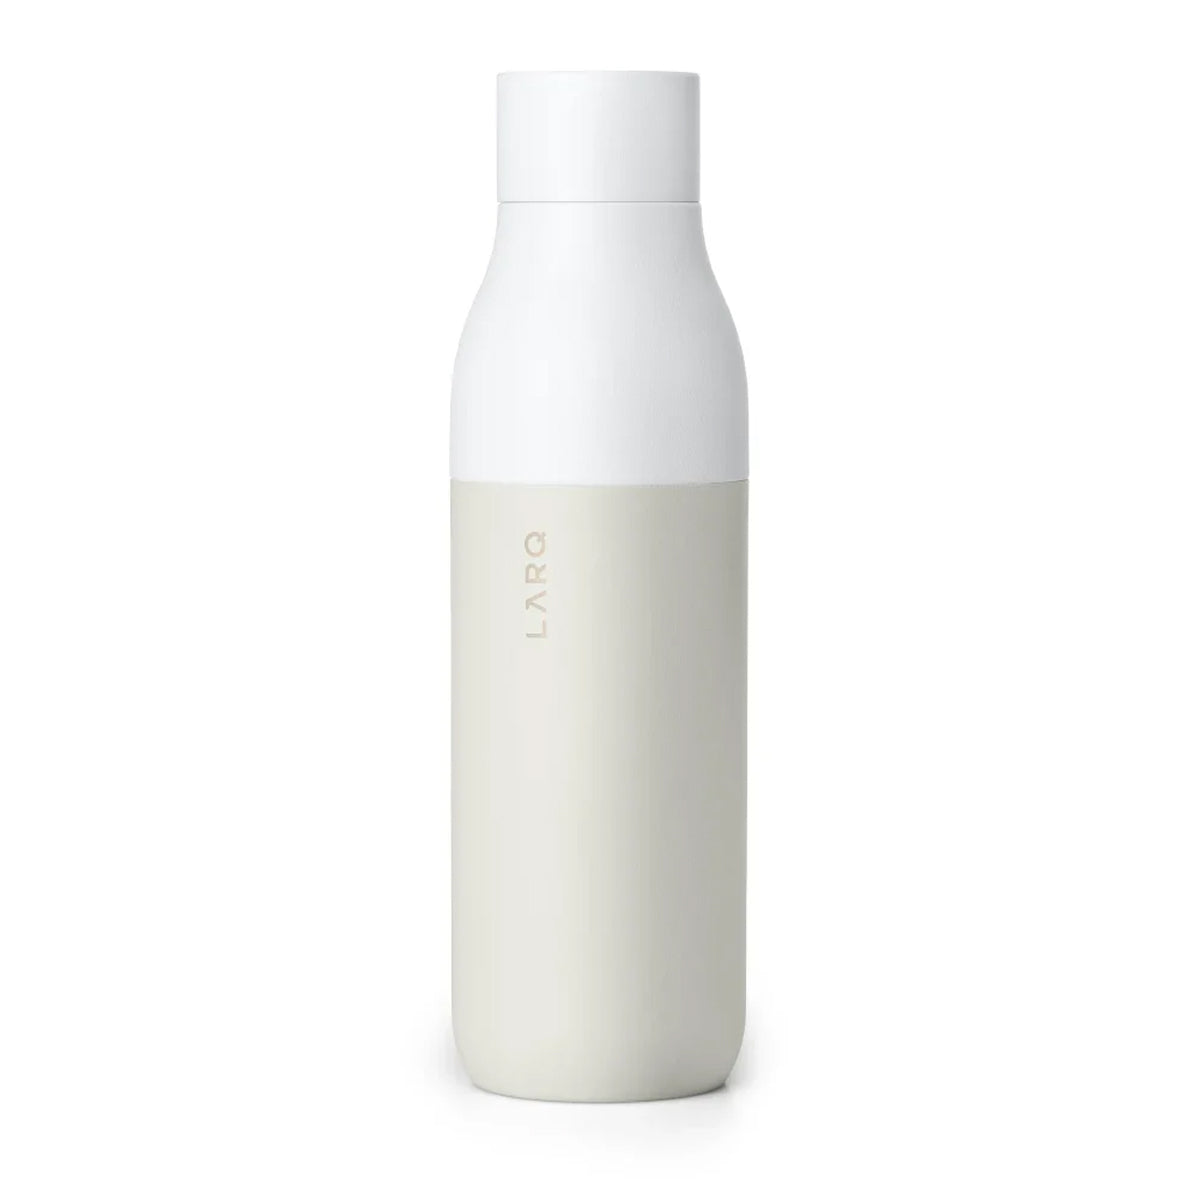 LARQ Insulated Bottle Granite White 740ml